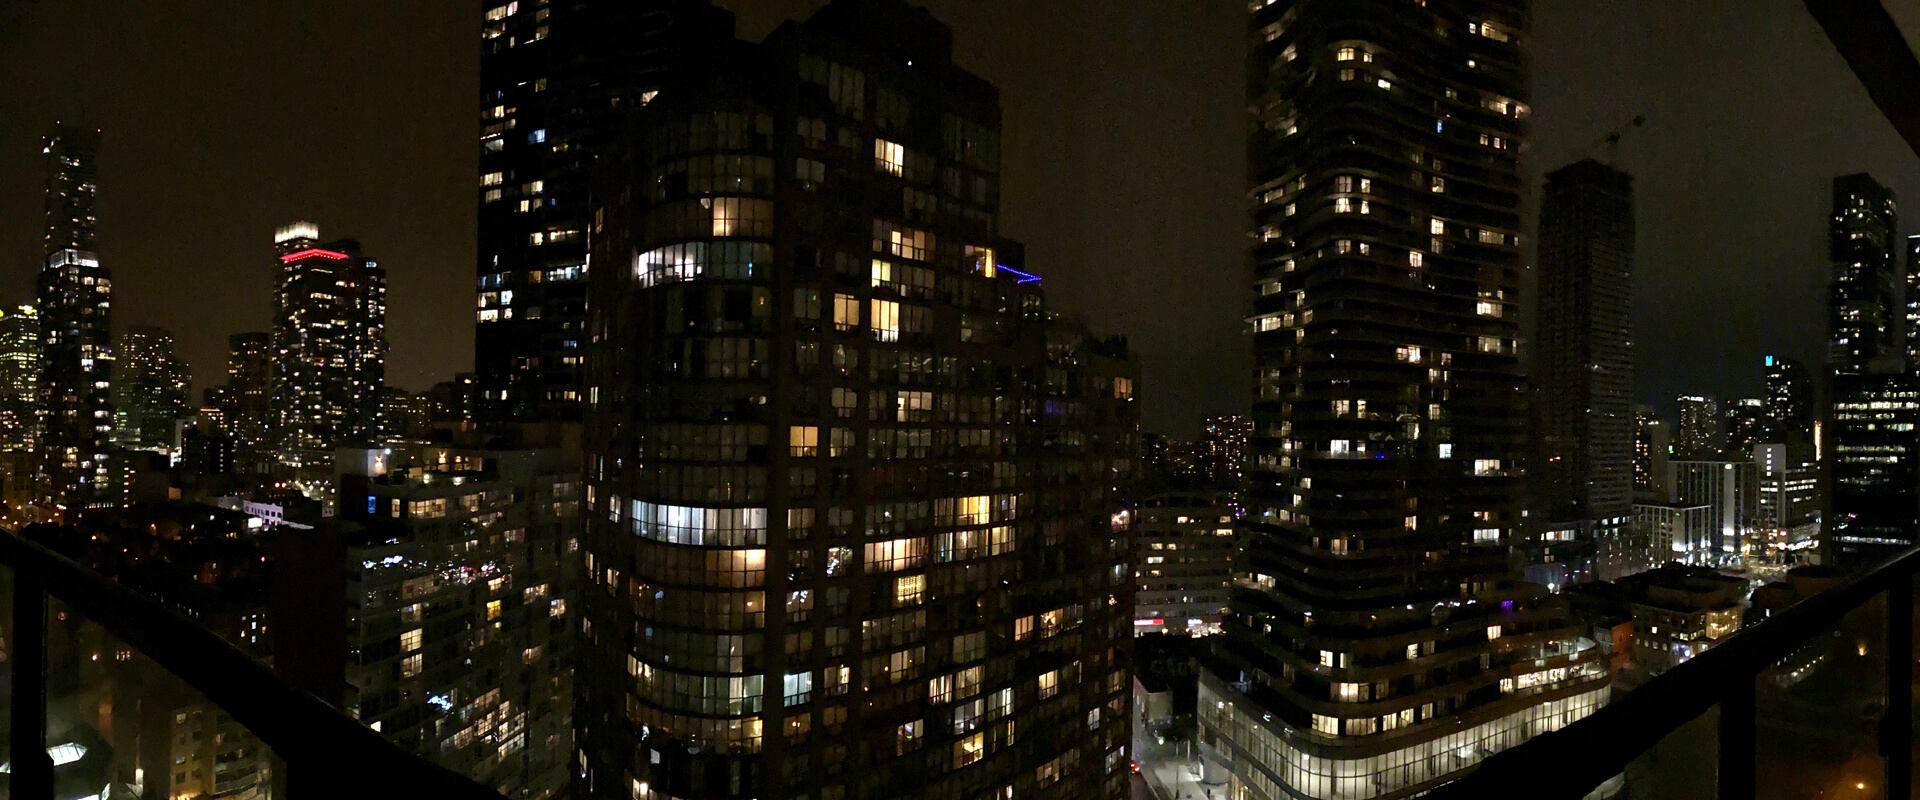 Photo of Toronto city at night